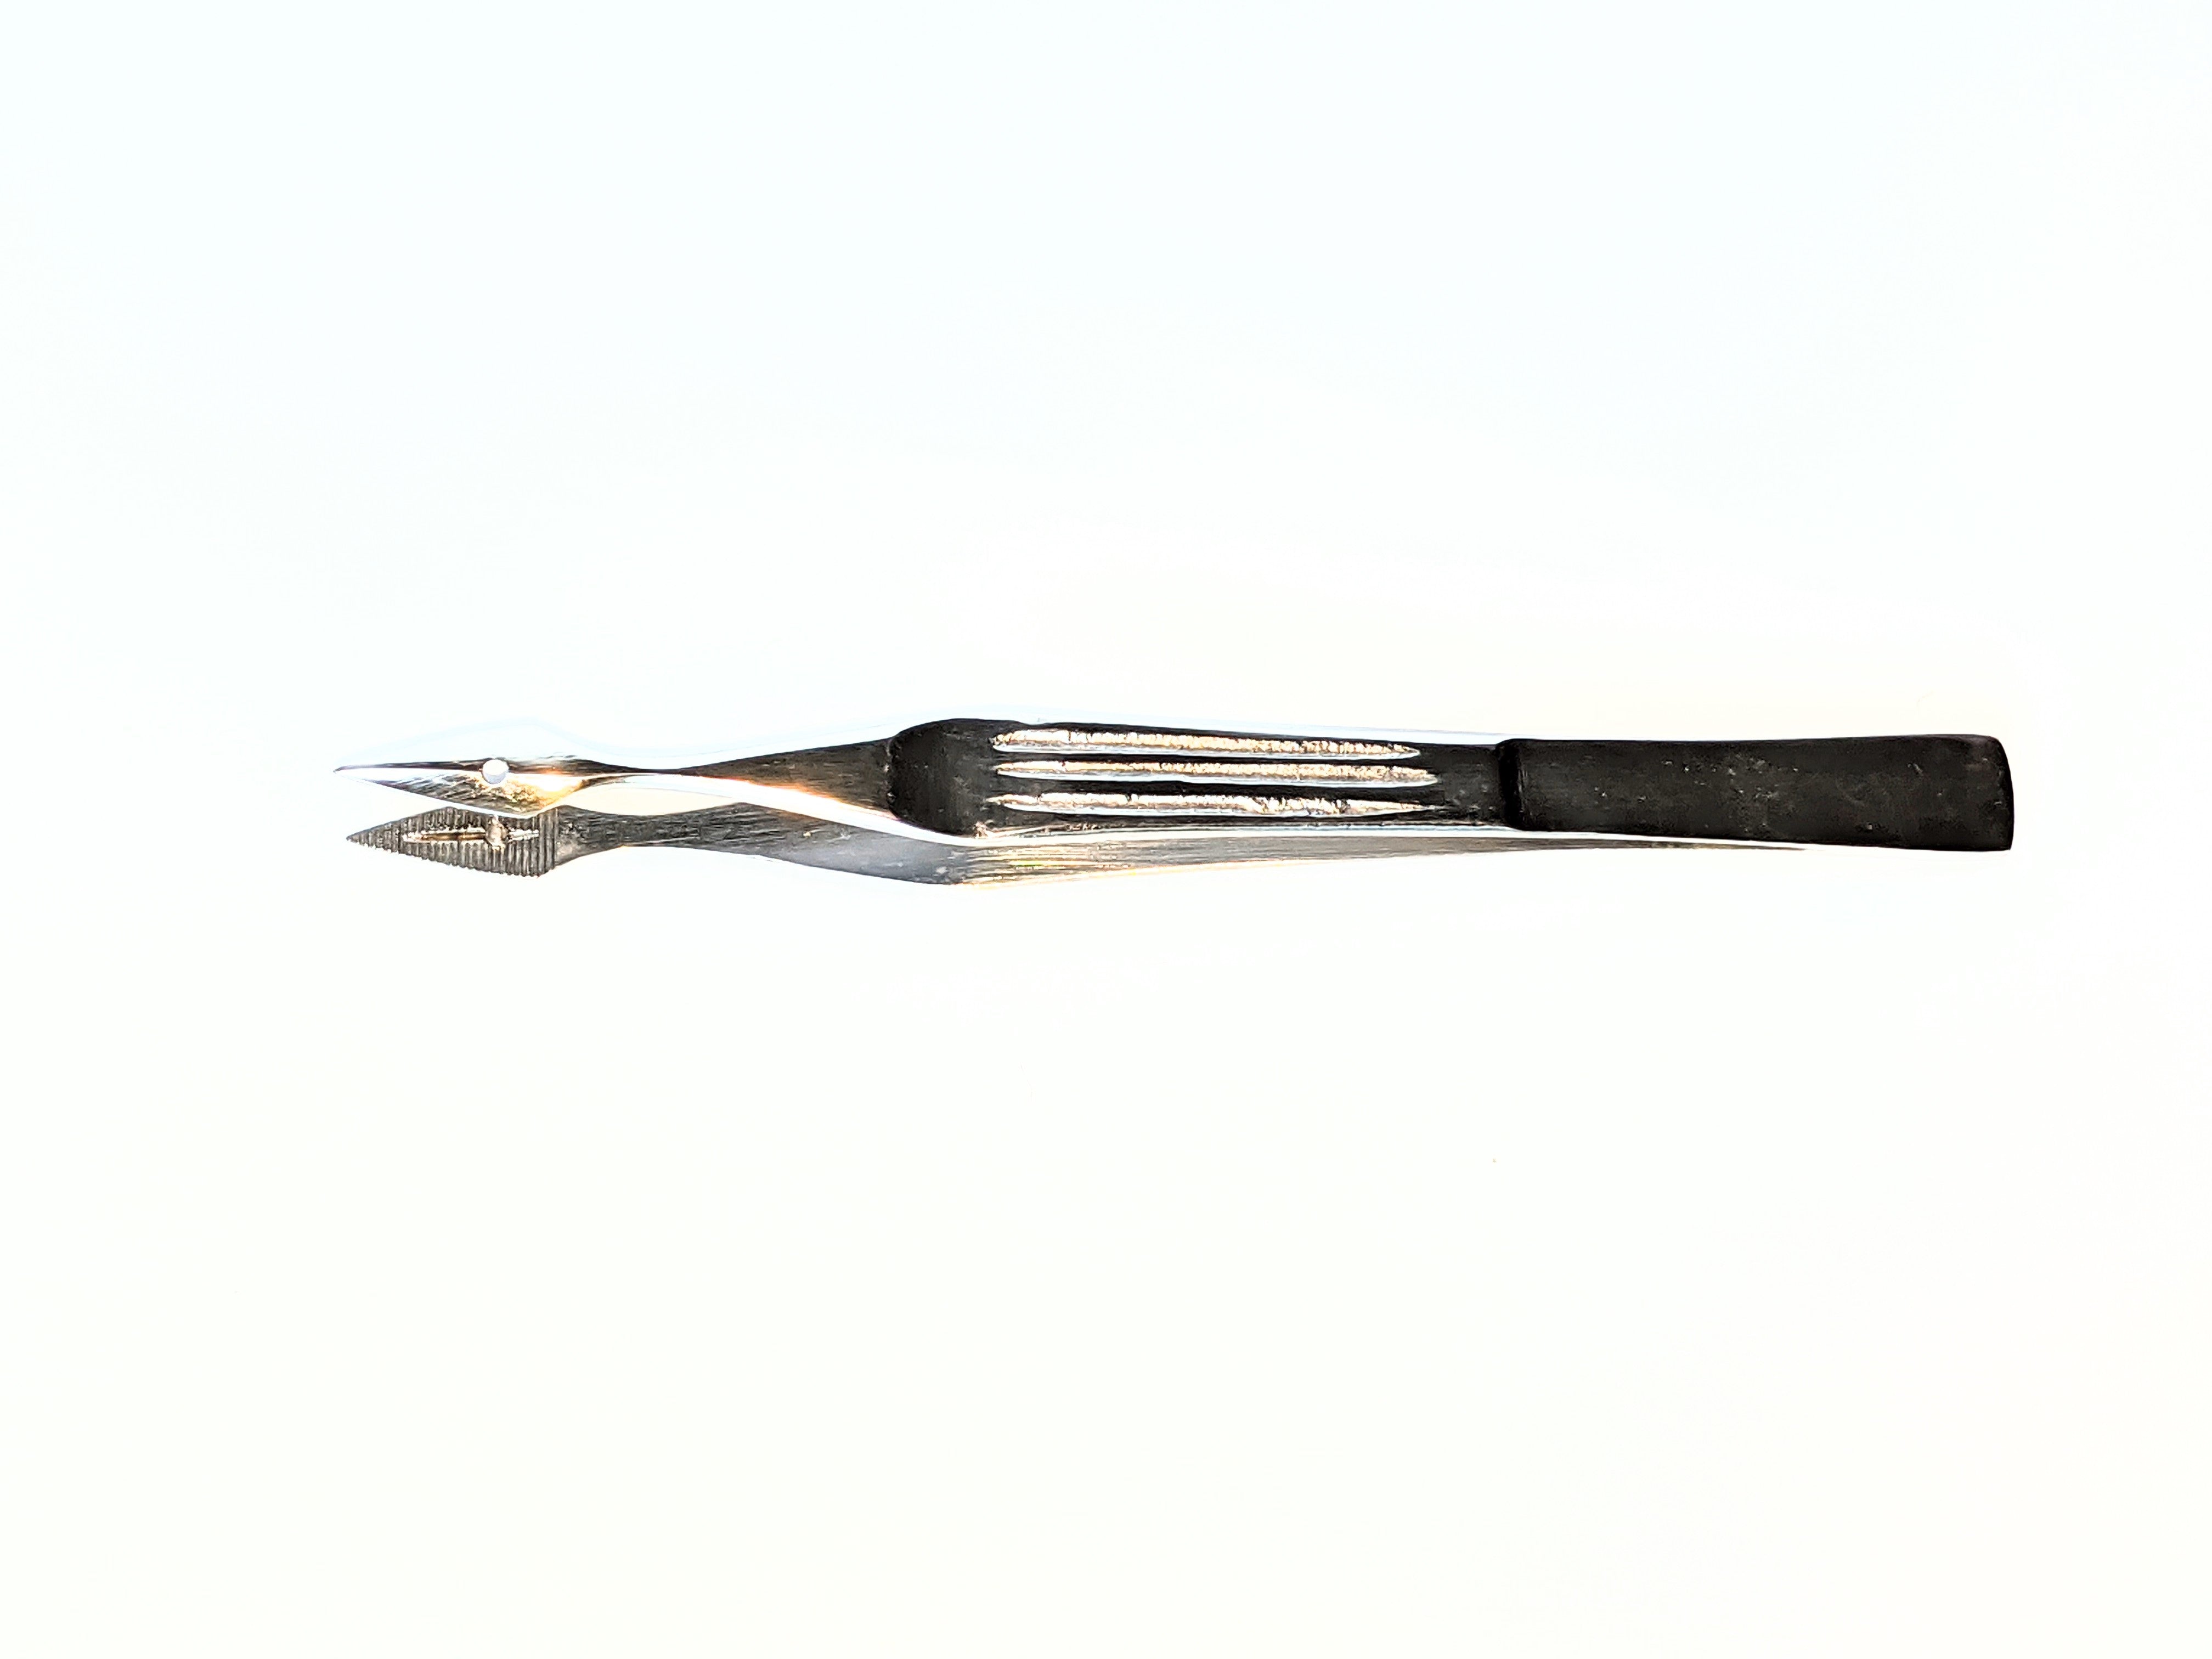 Carnalt splinter forceps 4.5 inch, basic quality by Prestige instruments